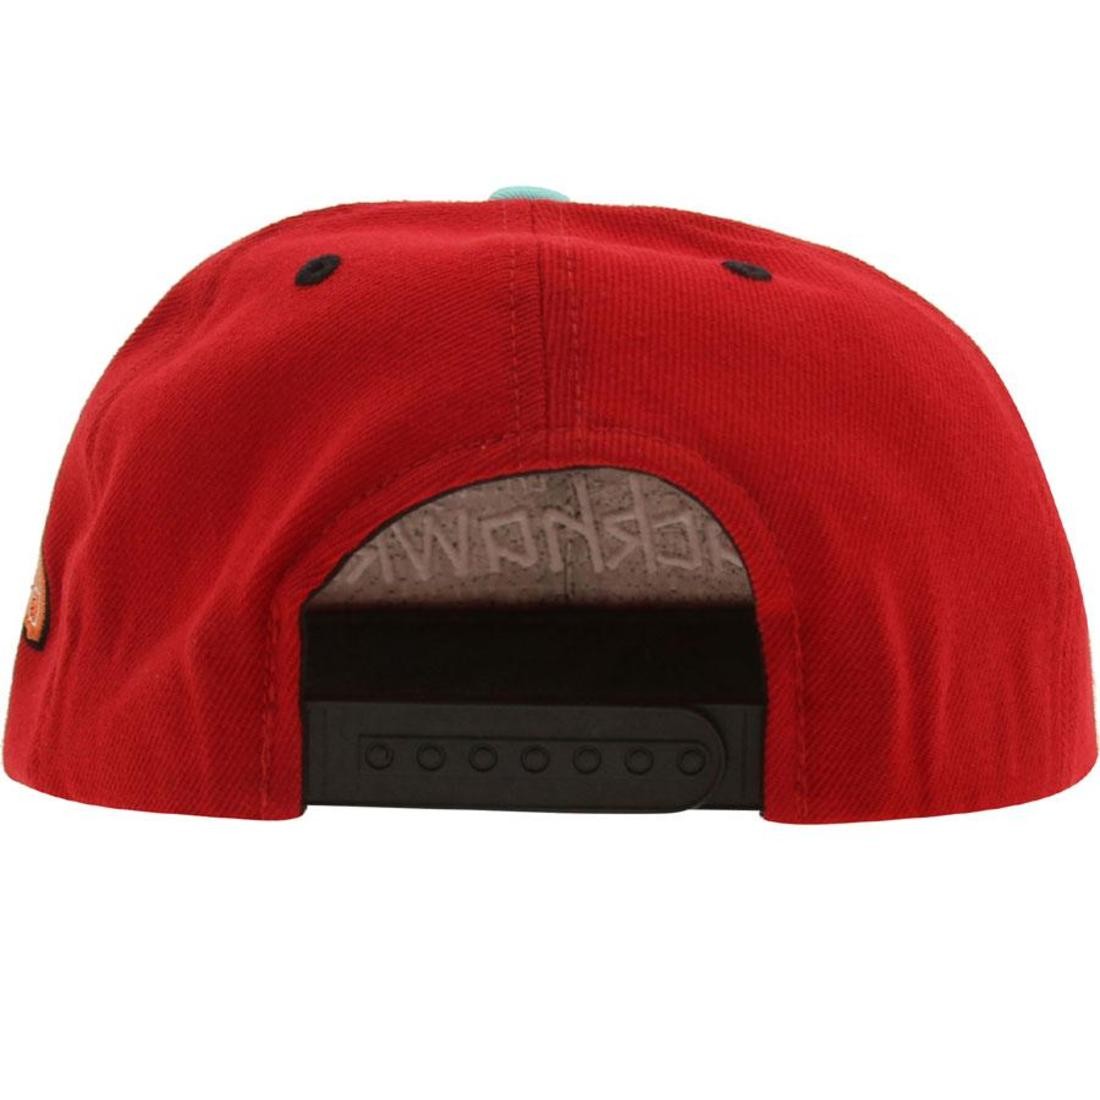 Bait x NHL x American Needle San Jose Sharks NHL Retro Snapback Cap (Black / Turquoise)